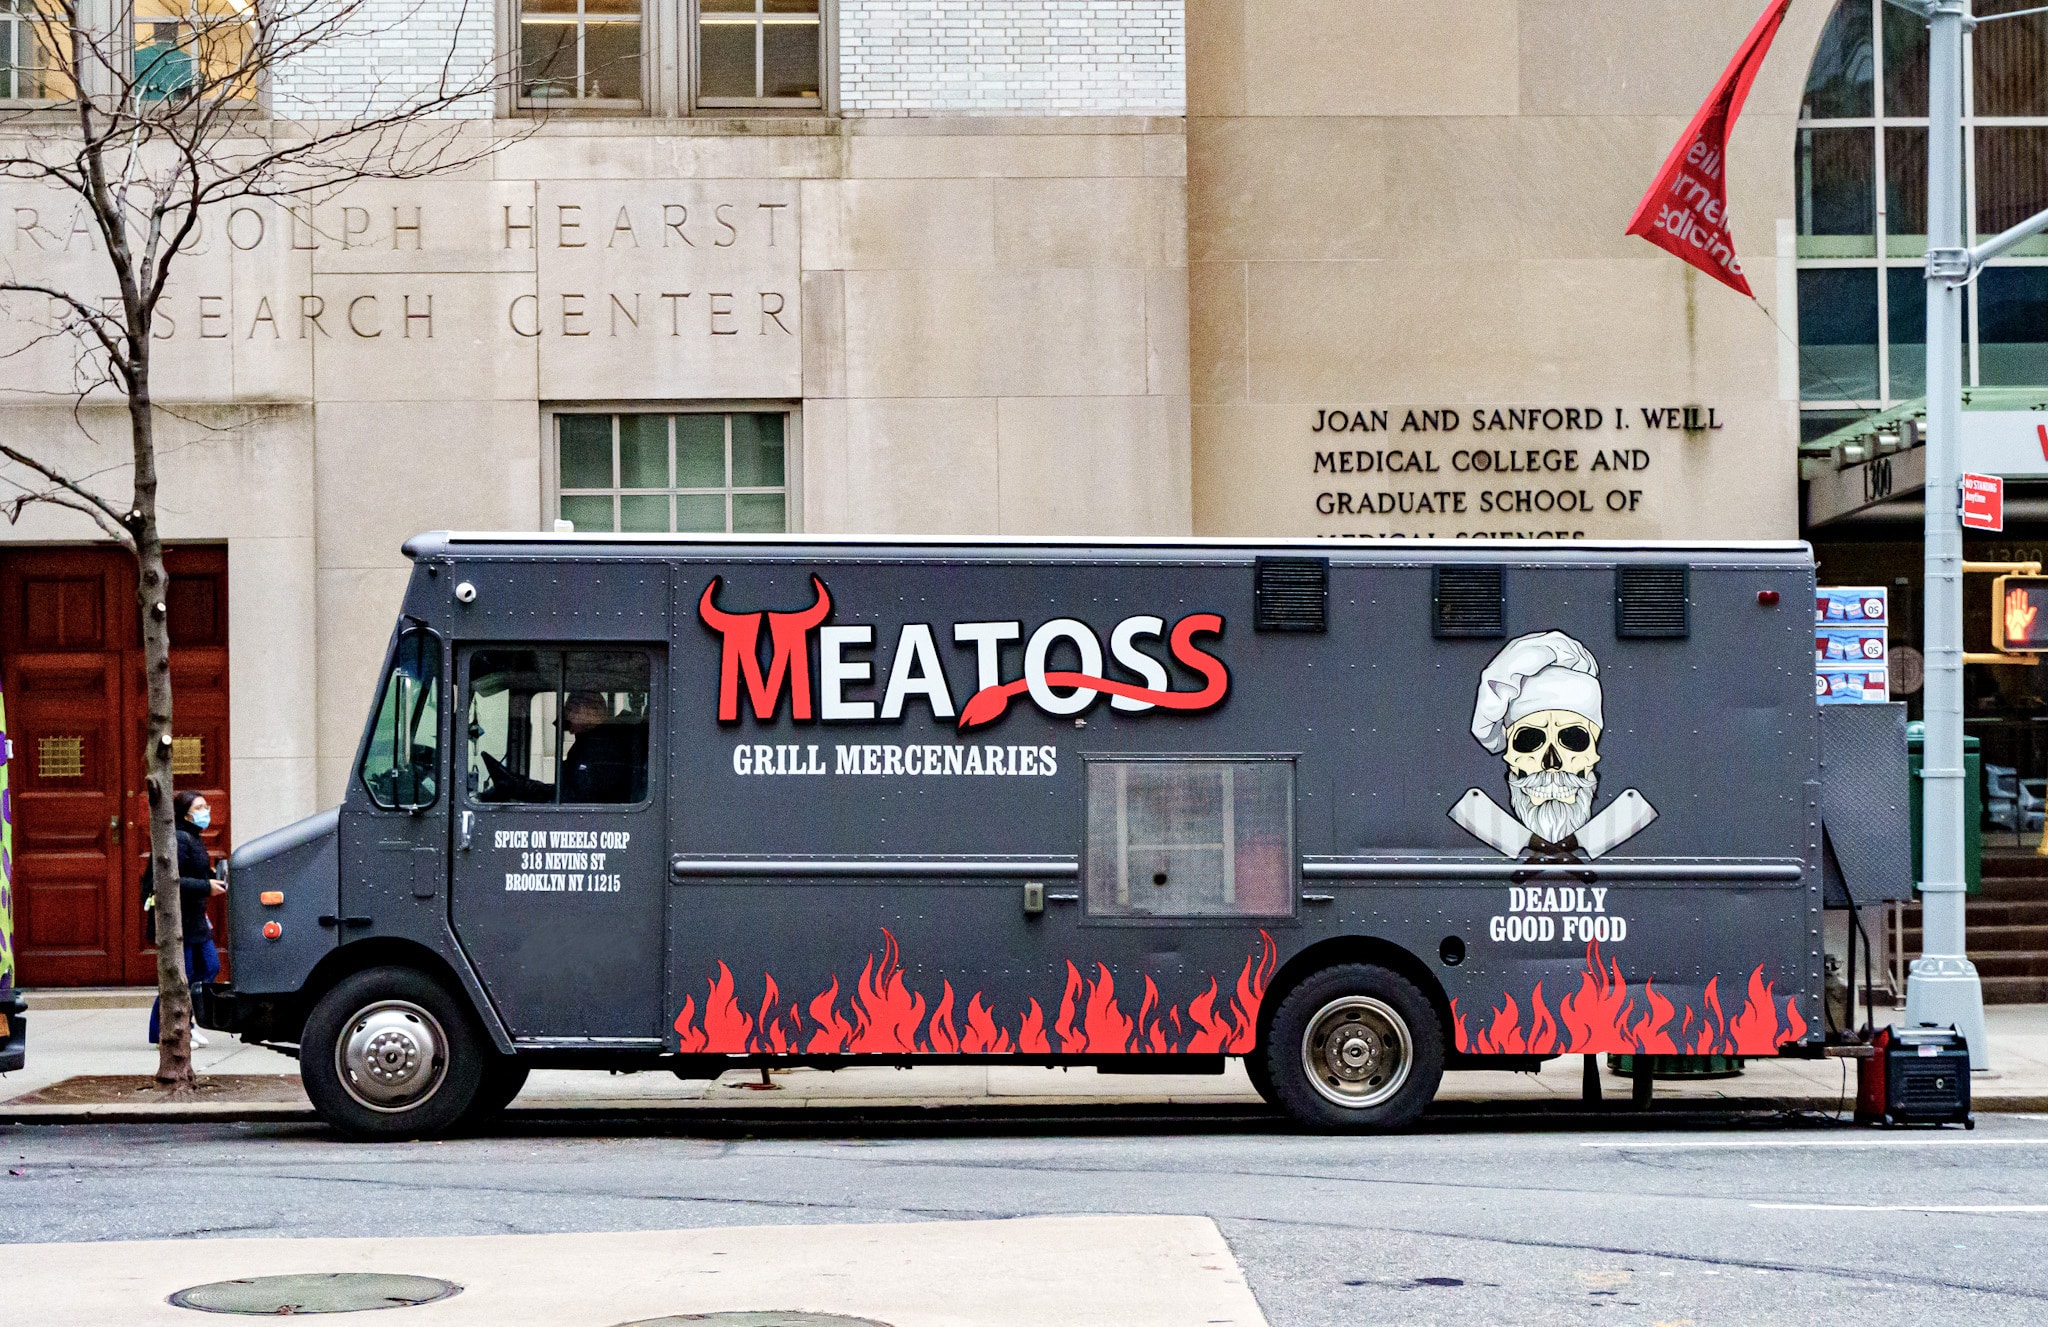 meatoss truck in front of medical school